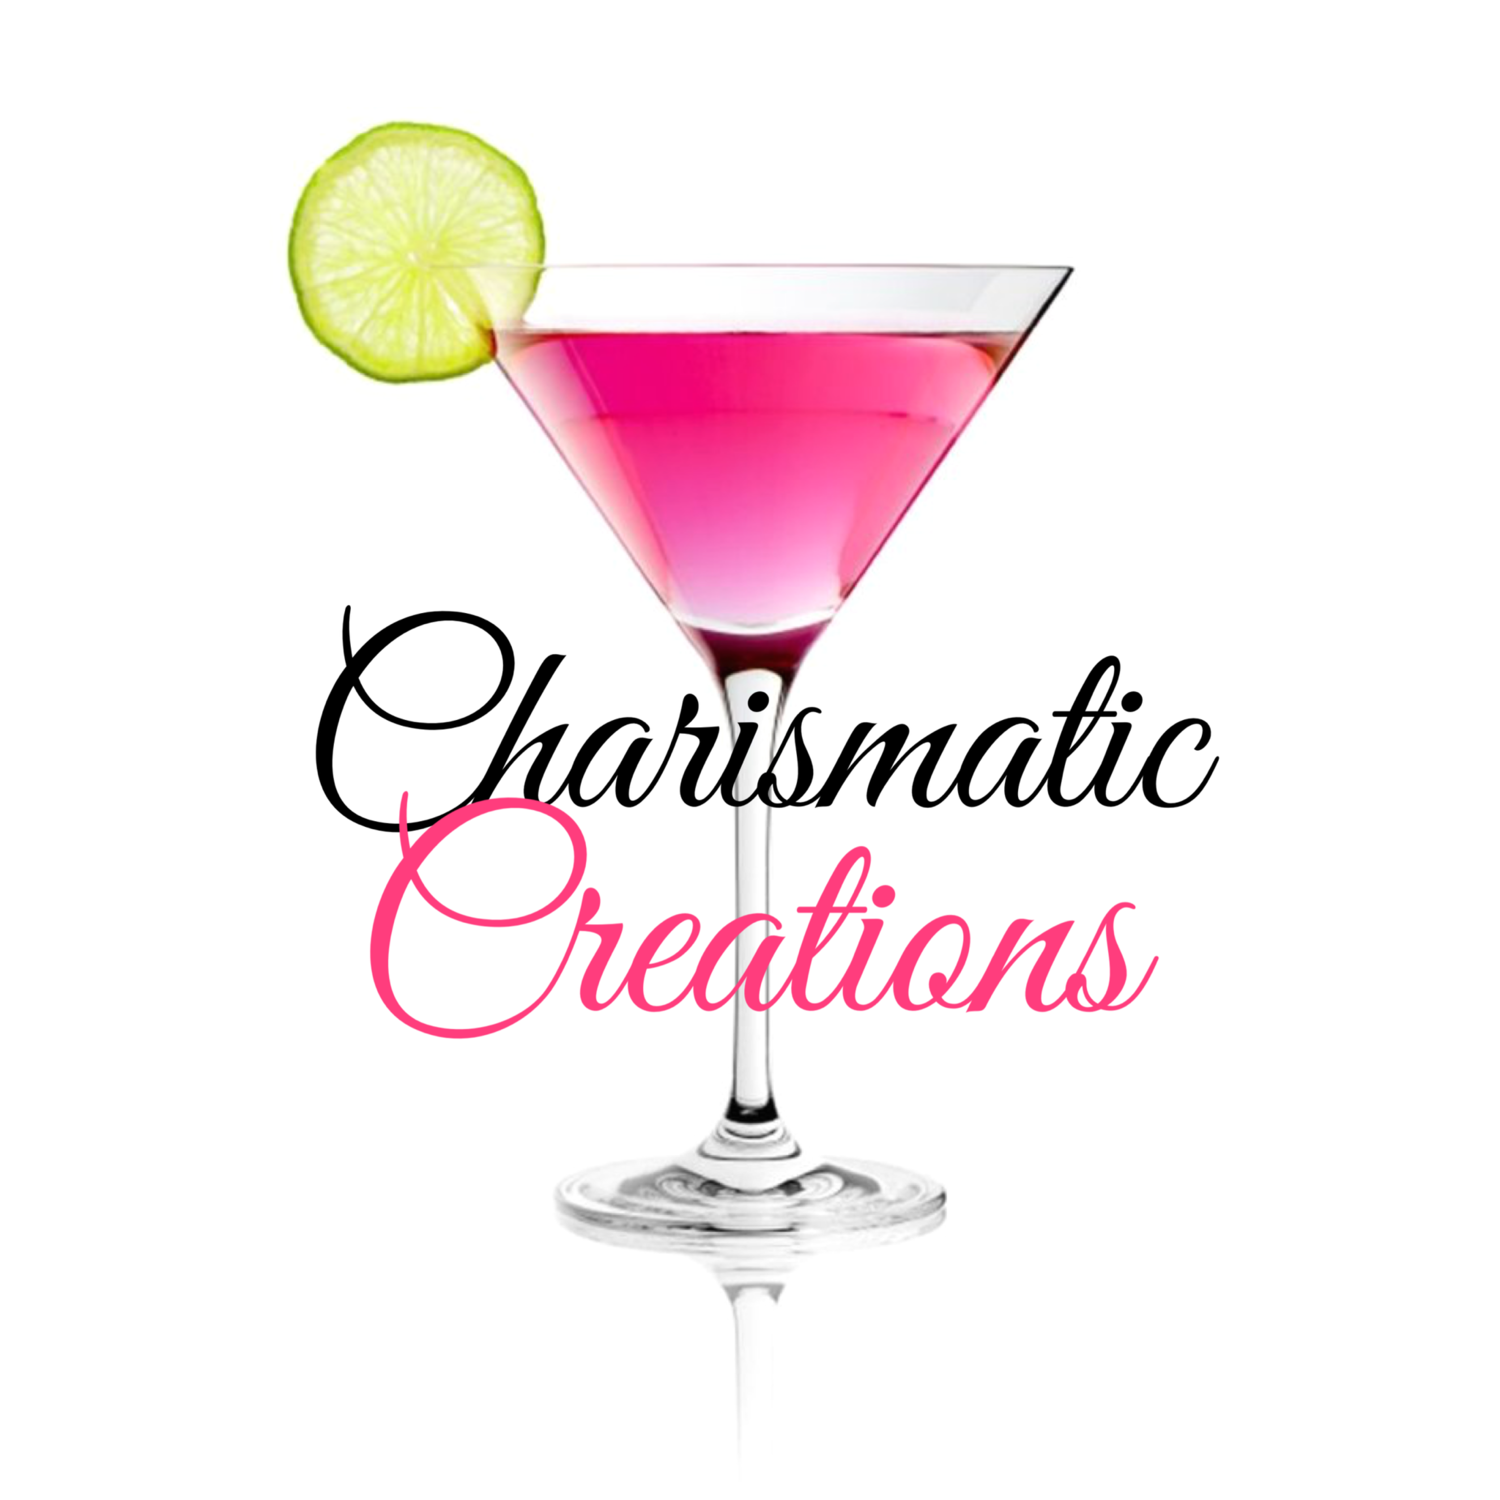 Charismatic Creations